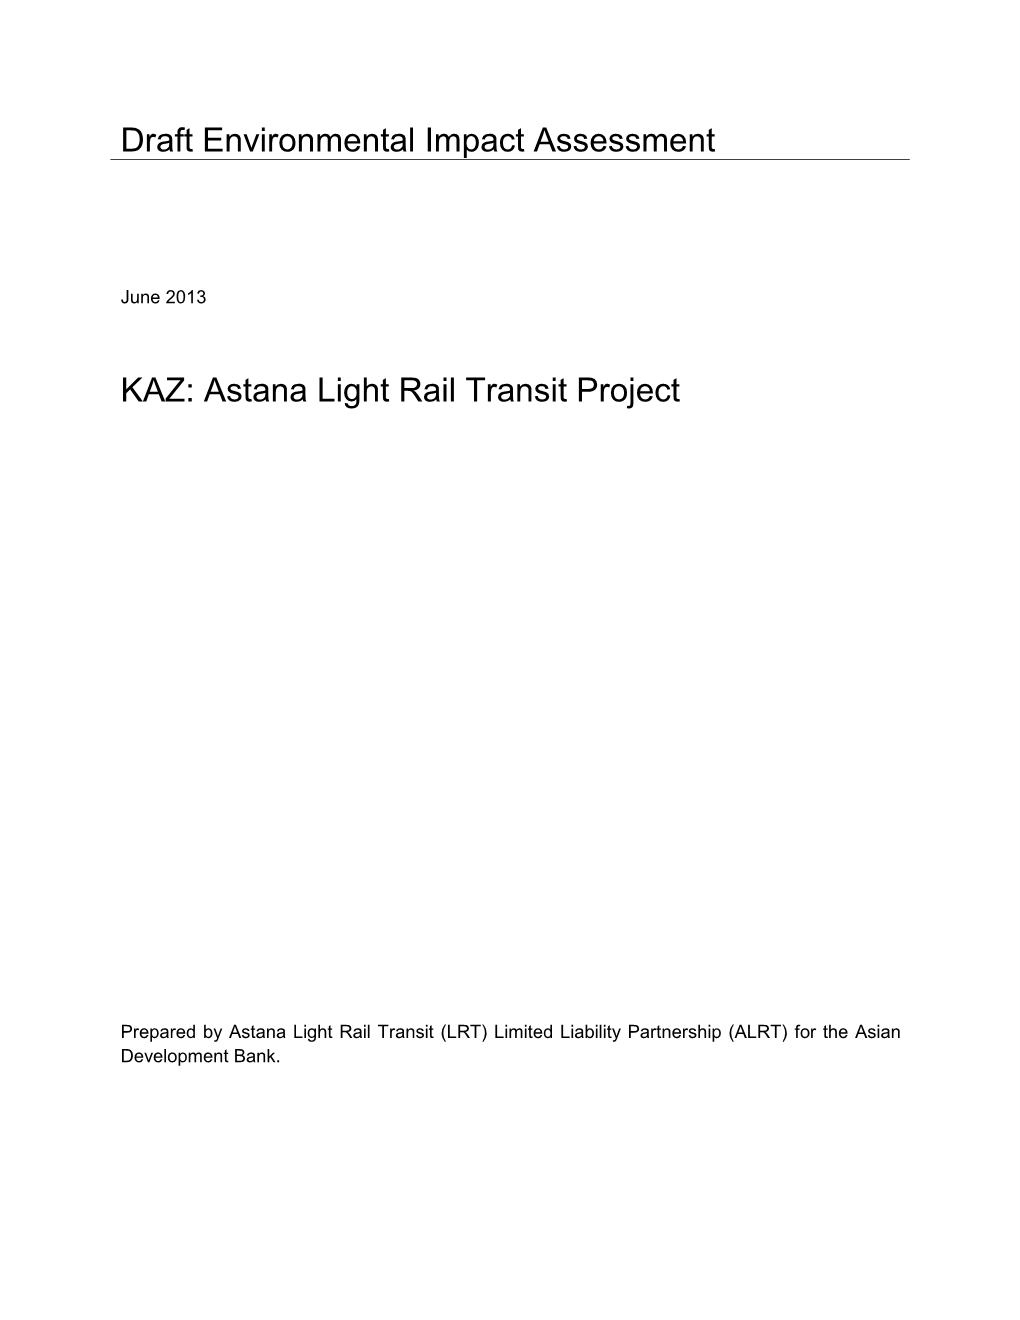 45195-001: Astana Light Rail Transit Project